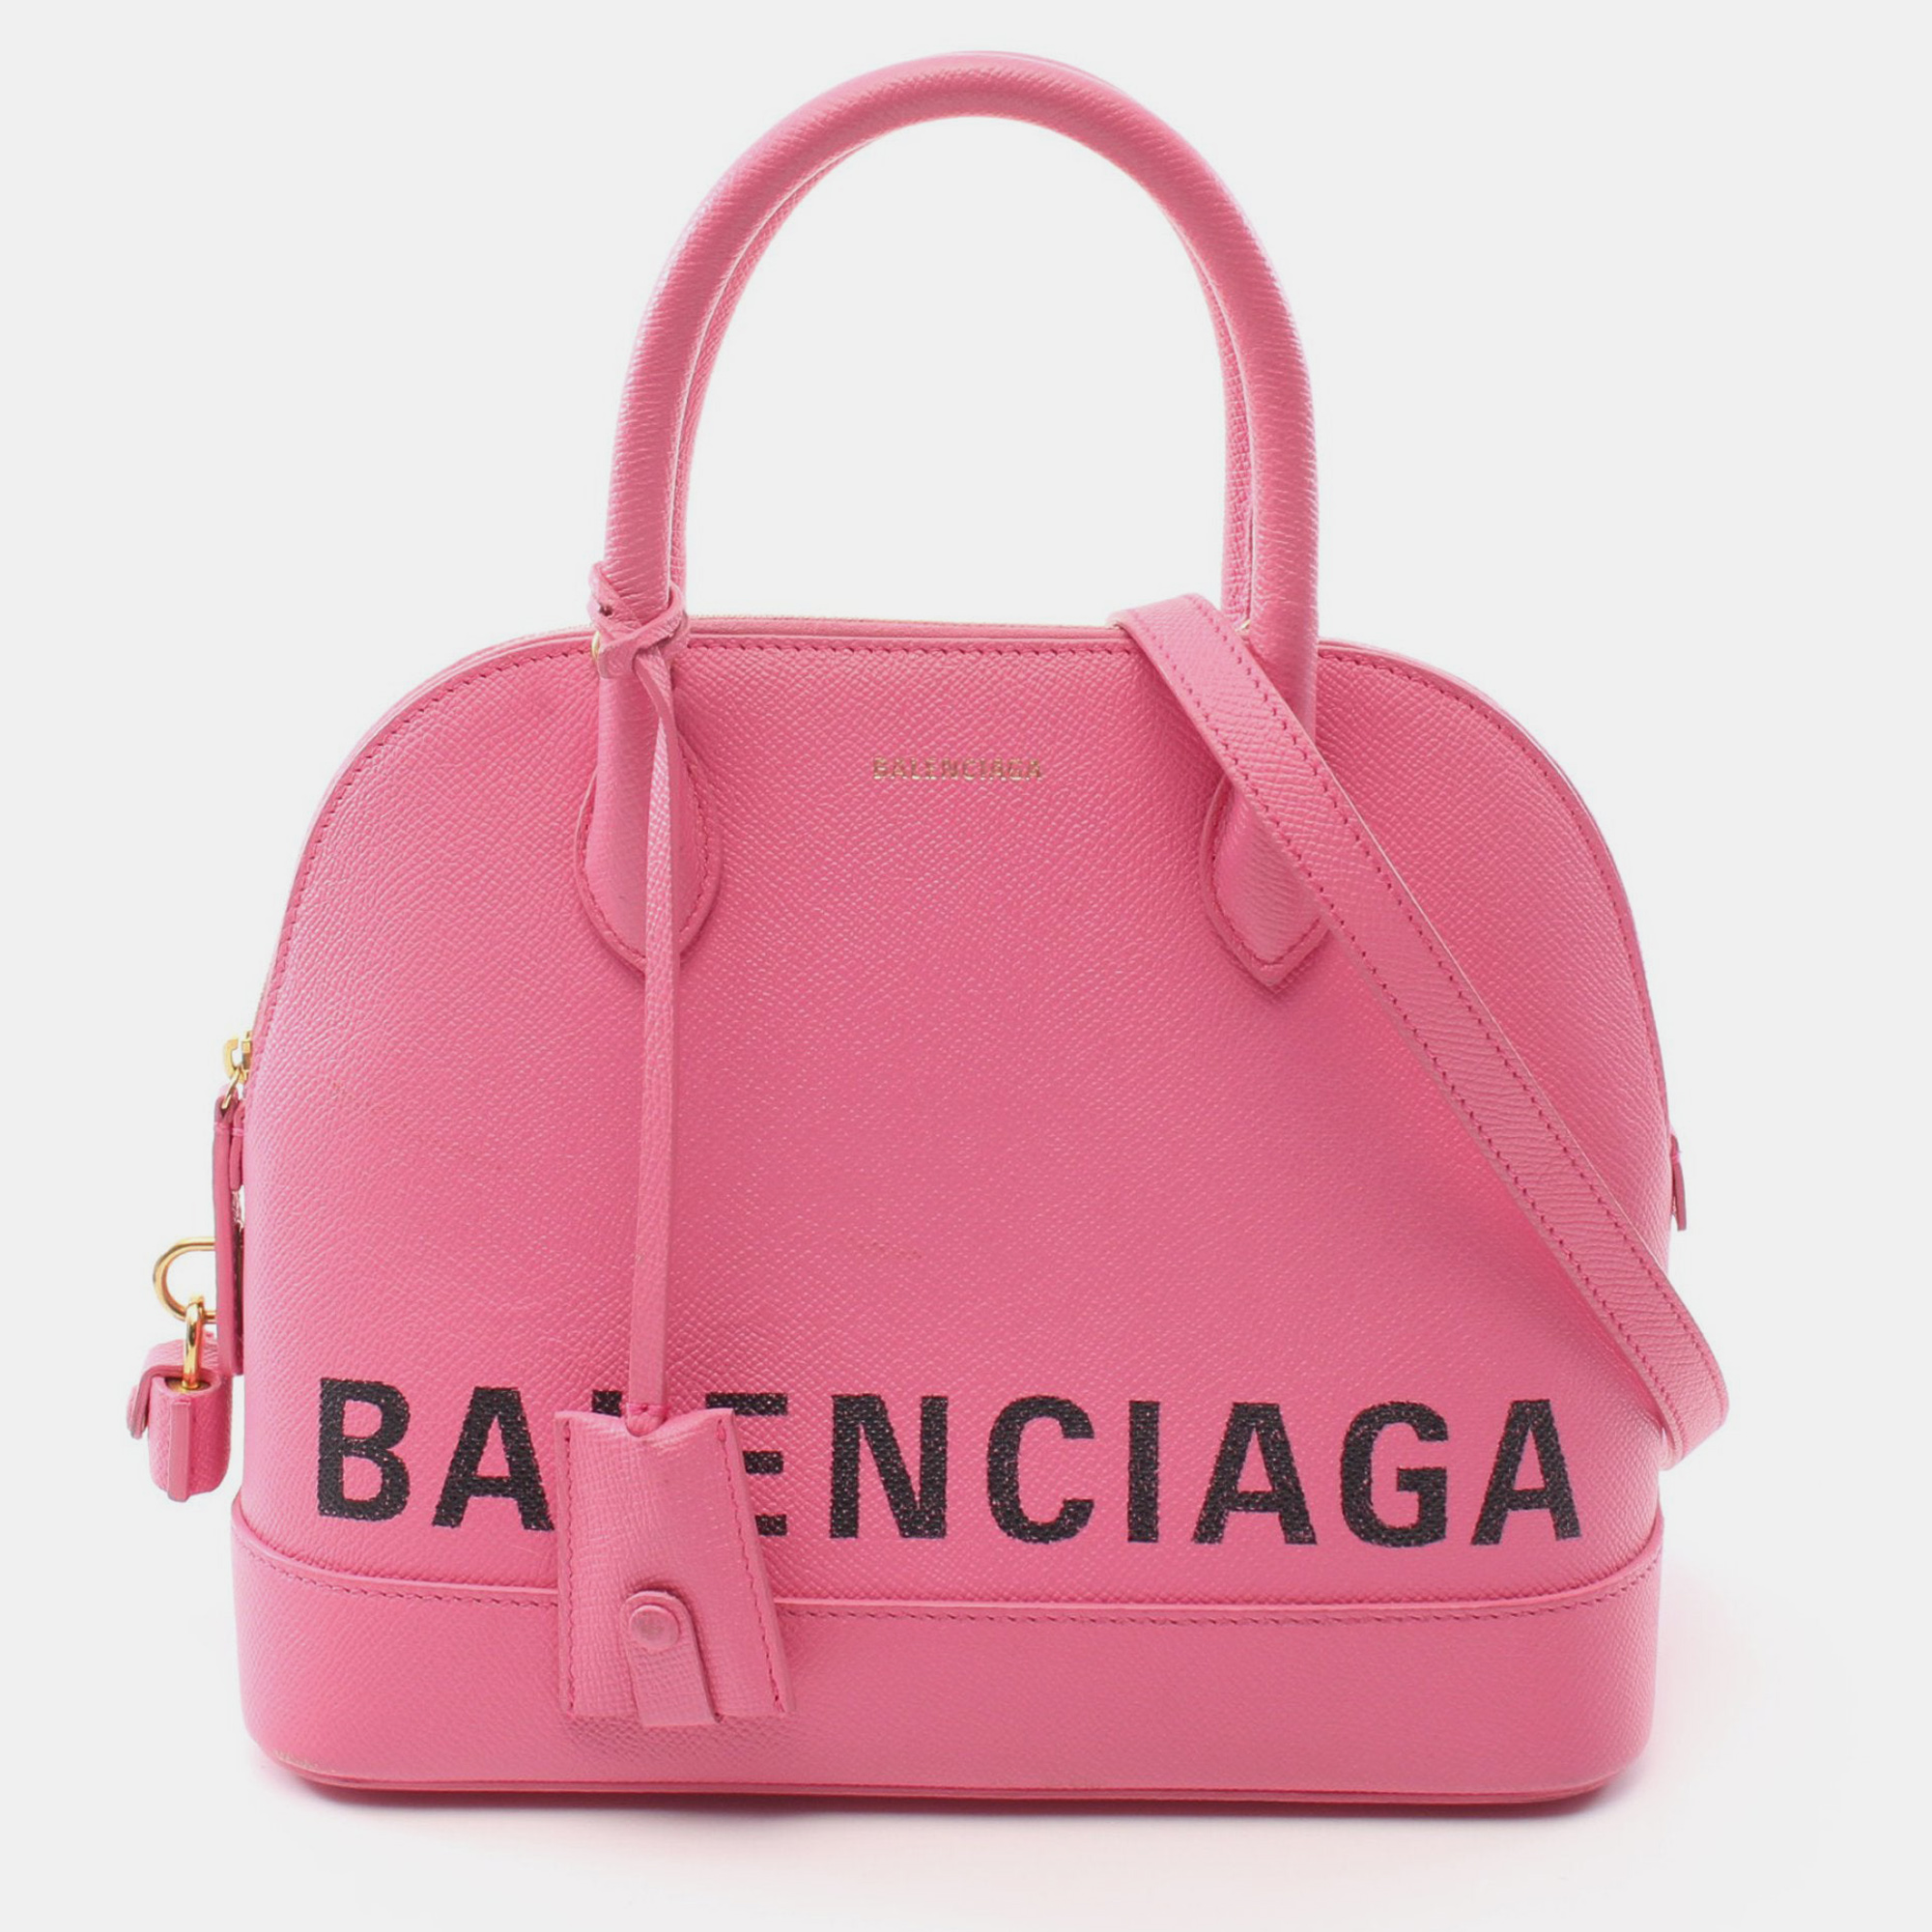 Balenciaga ville top handle bag s handbag leather pink black 2way